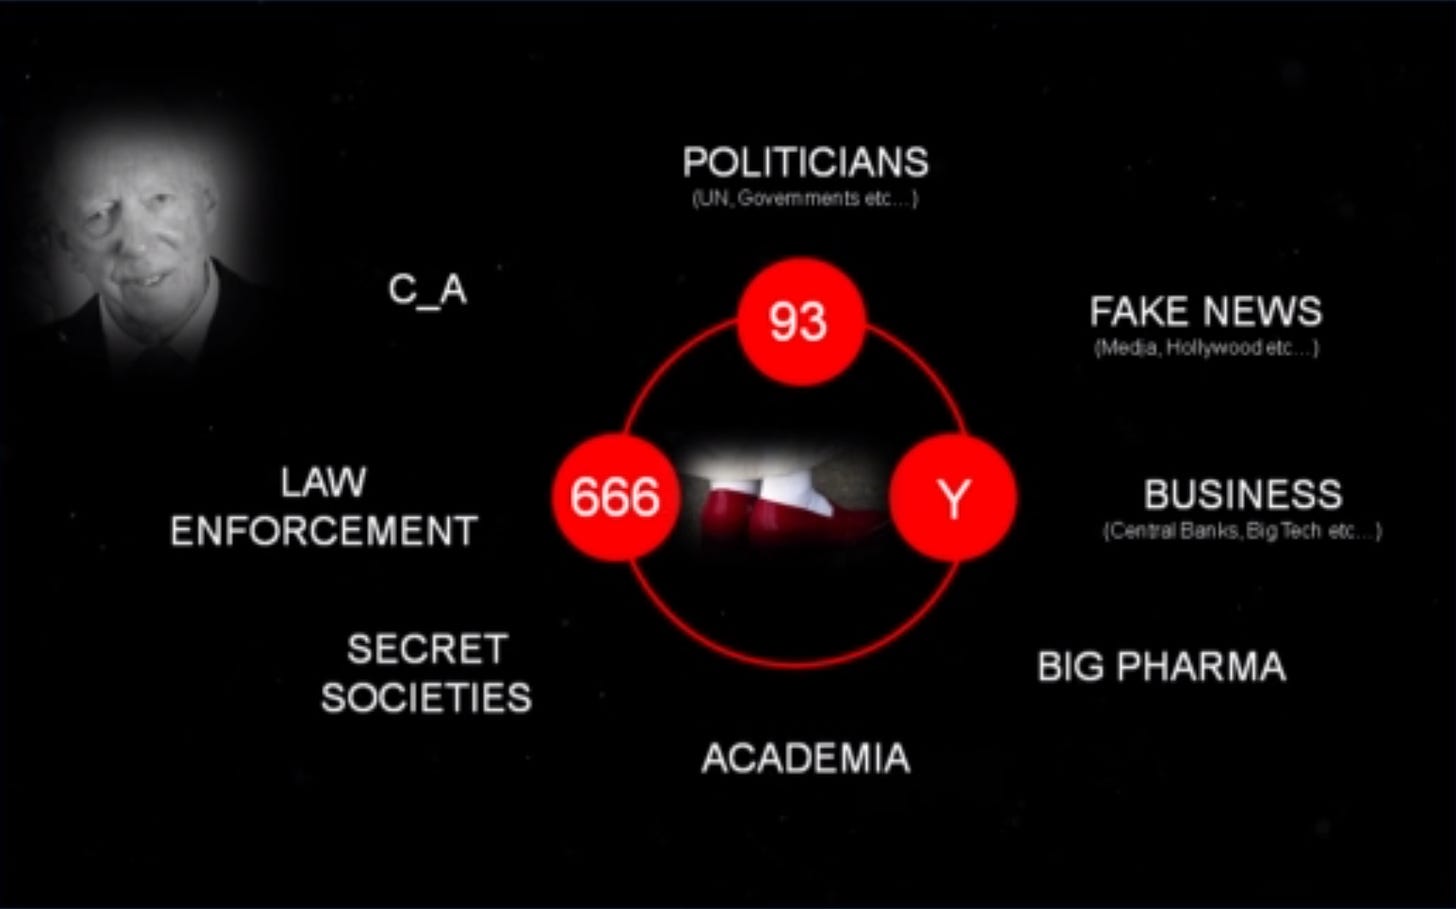 c_A 
LAW 
ENFORCEMENT 
SECRET 
SOCIETIES 
666 
POLITICIANS 
CJN _ Go«nrrmts «c 
93 
ACADEMIA 
FAKE NEWS 
BUSINESS 
BIG PHARMA 